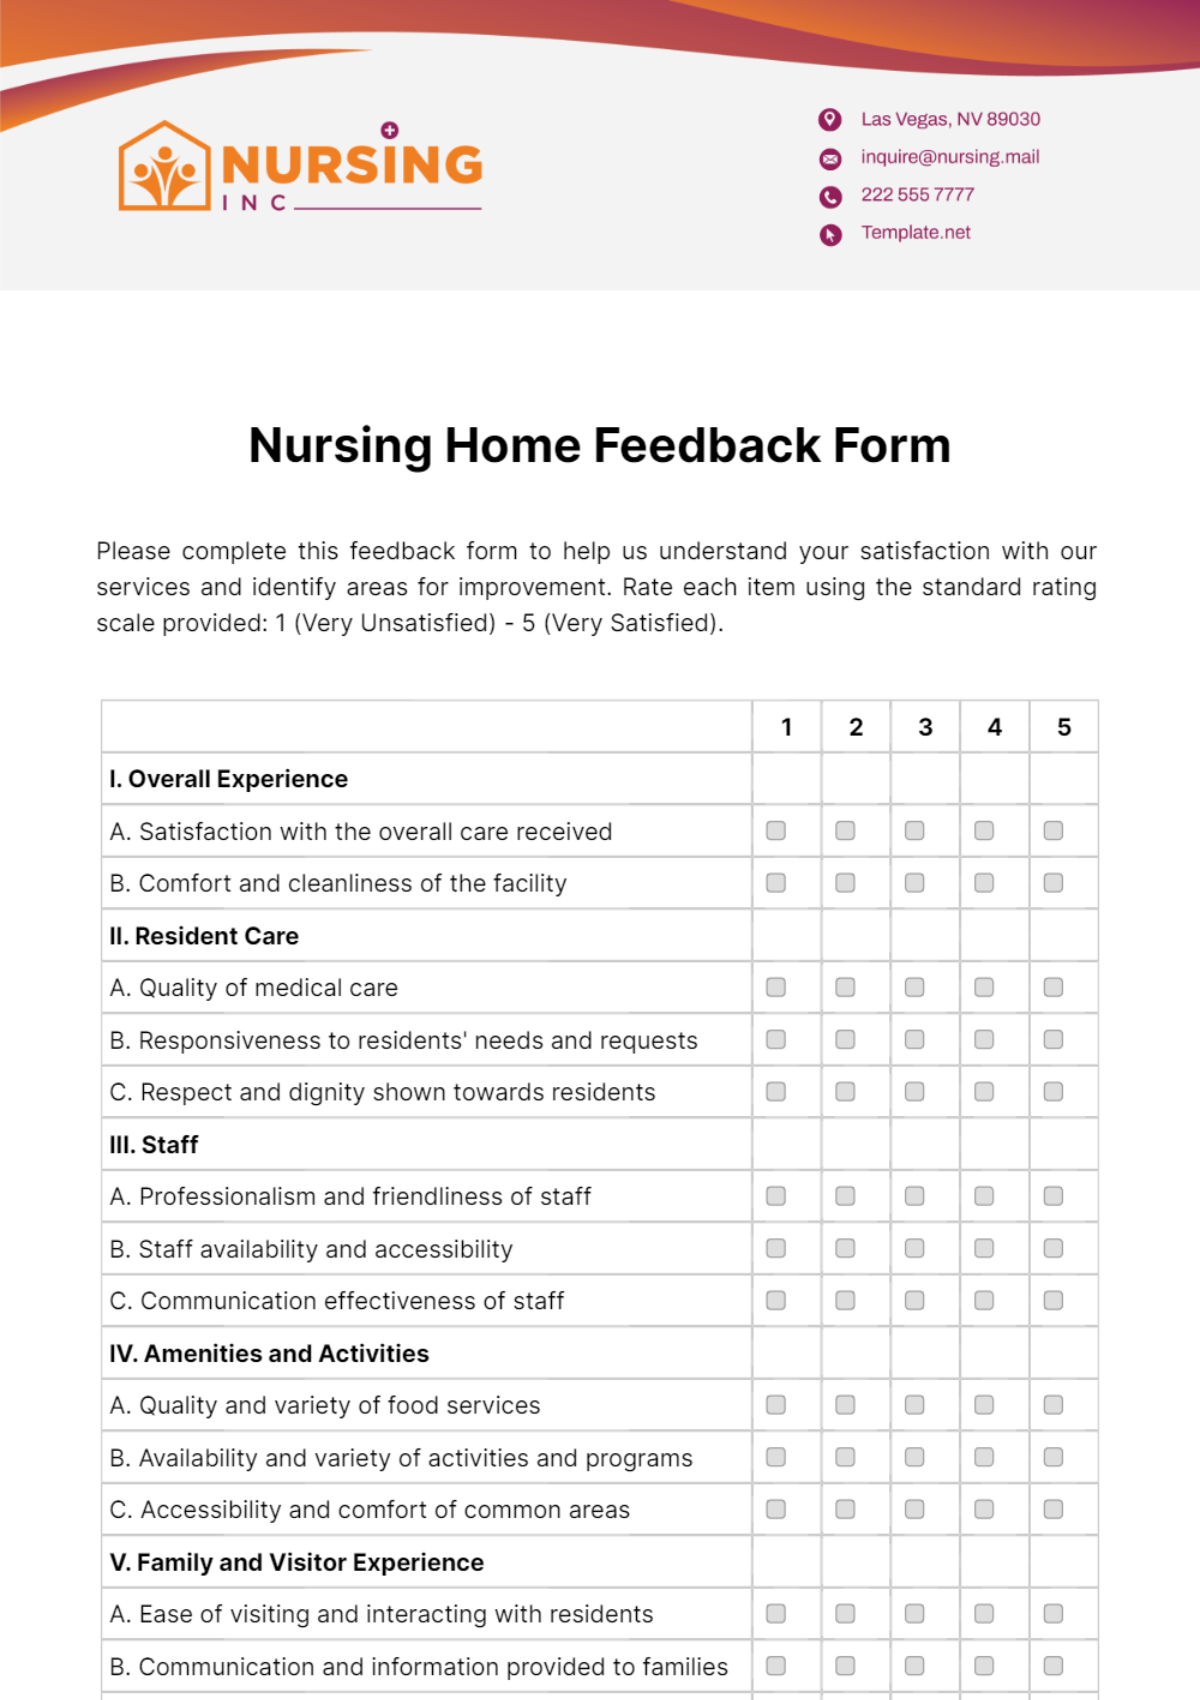 Nursing Home Feedback Form Template